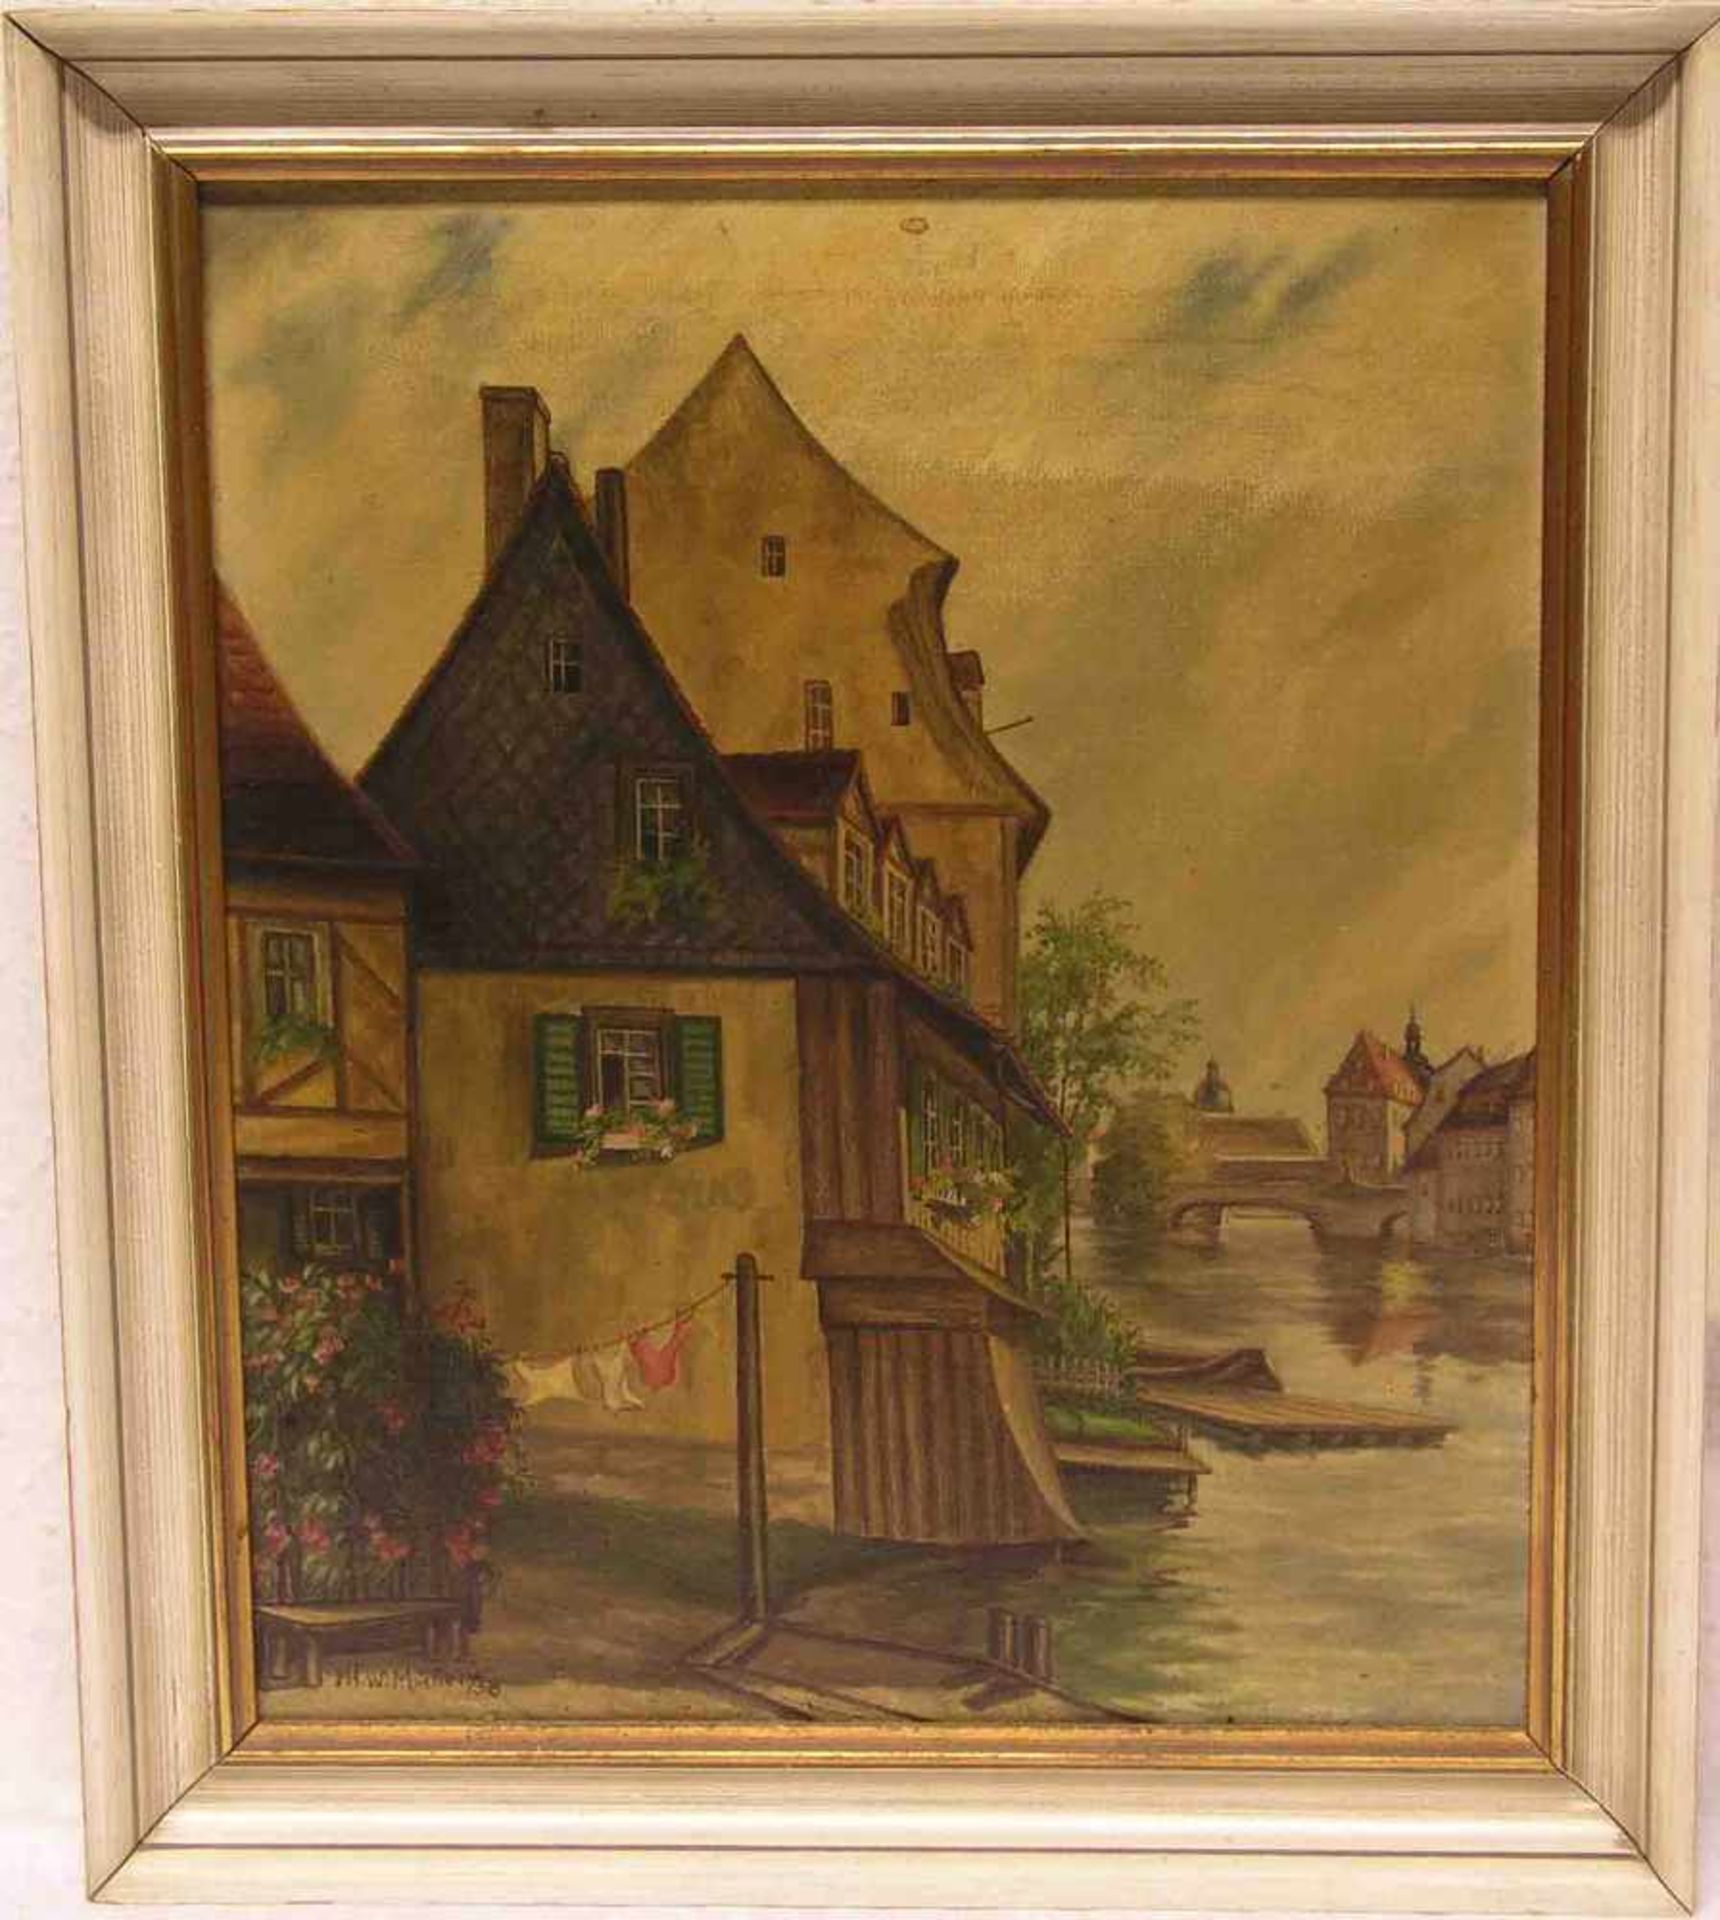 Müller, Ph. W.: "Bamberg, Klein Venedig". Öl/Lwd., signiert (19)38, 38 x 32cm, Rahmen.- - -20.17 %